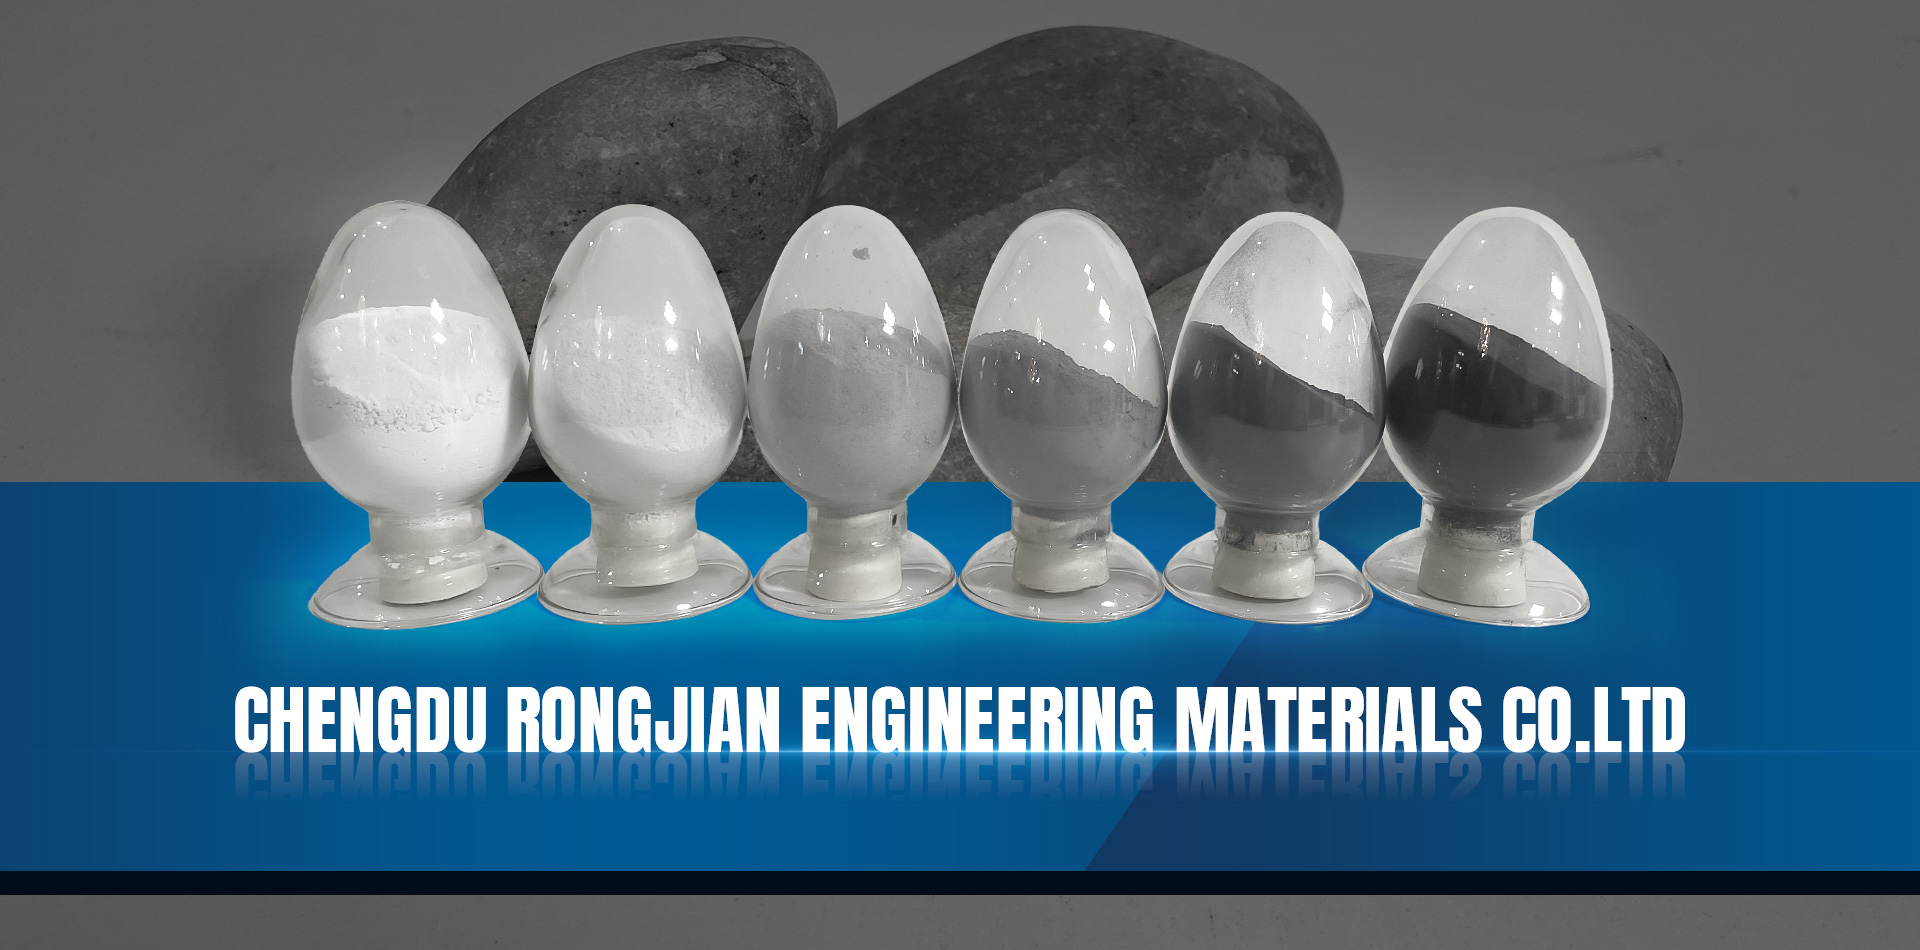 Chengdu Rongjian Engineering Materials Co.Ltd